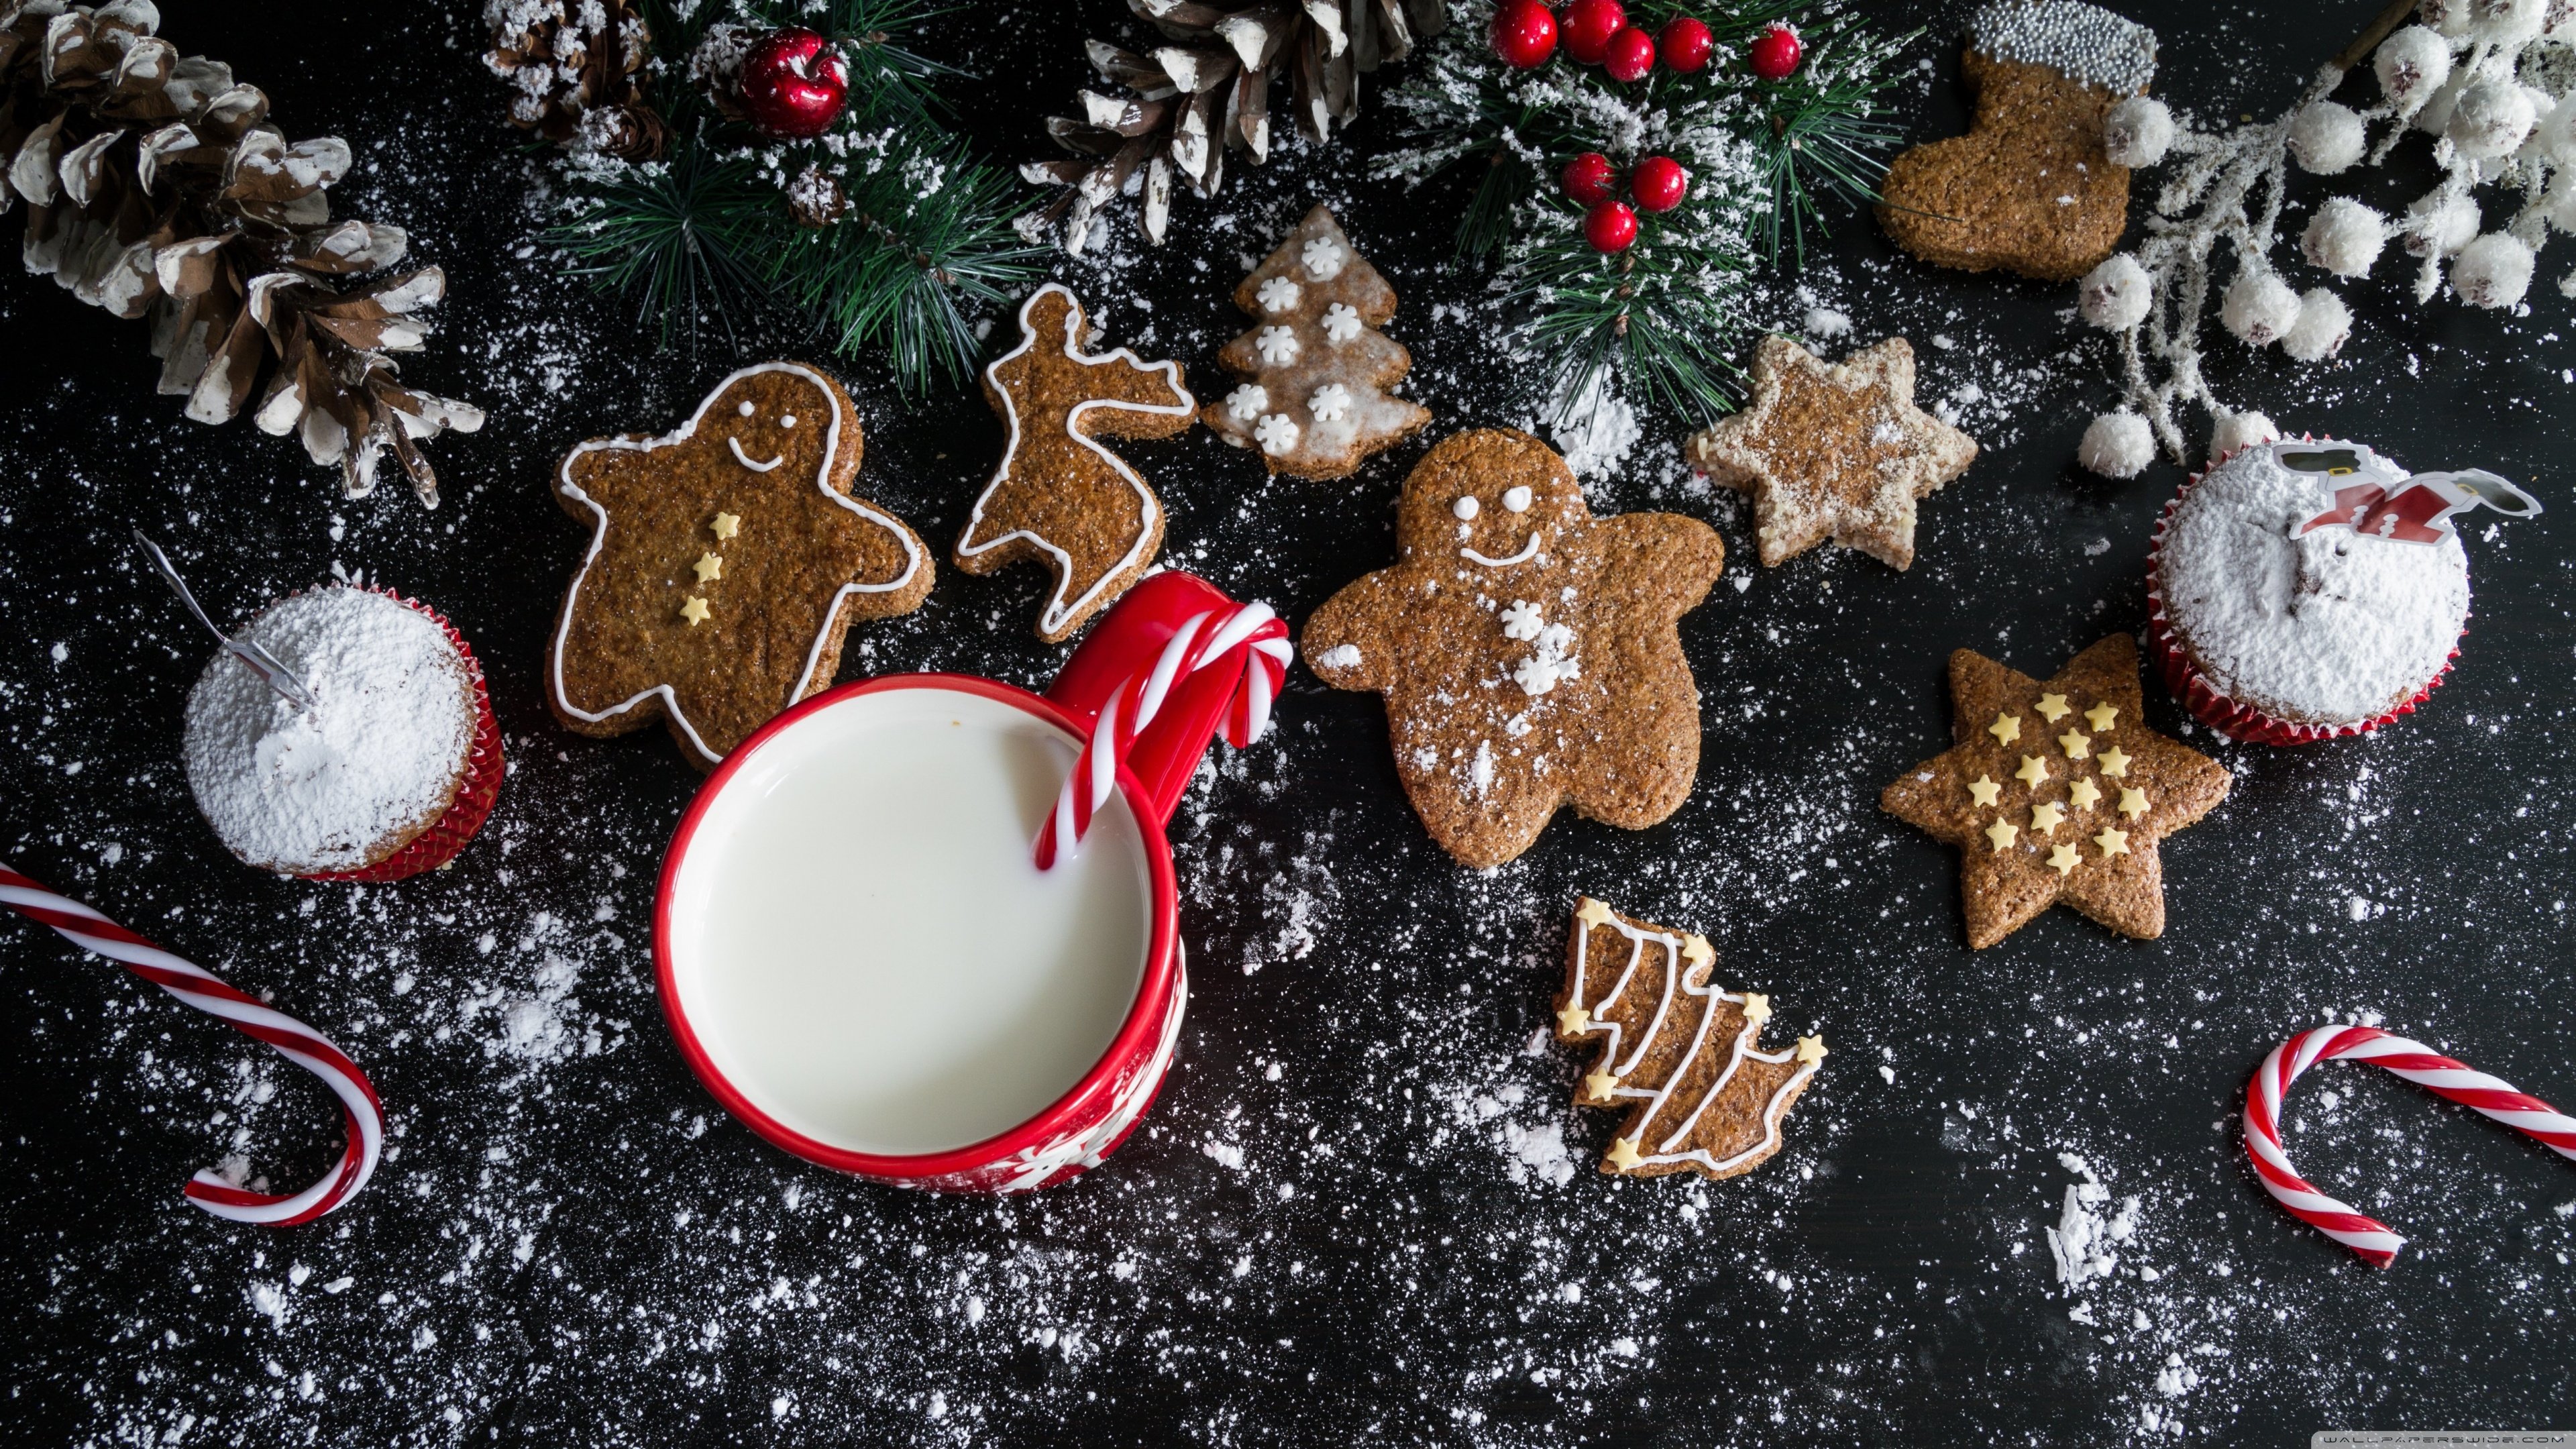 Christmas Gingerbread Cookies and Milk Ultra HD Desktop Background Wallpaper for 4K UHD TV, Widescreen & UltraWide Desktop & Laptop, Multi Display, Dual Monitor, Tablet